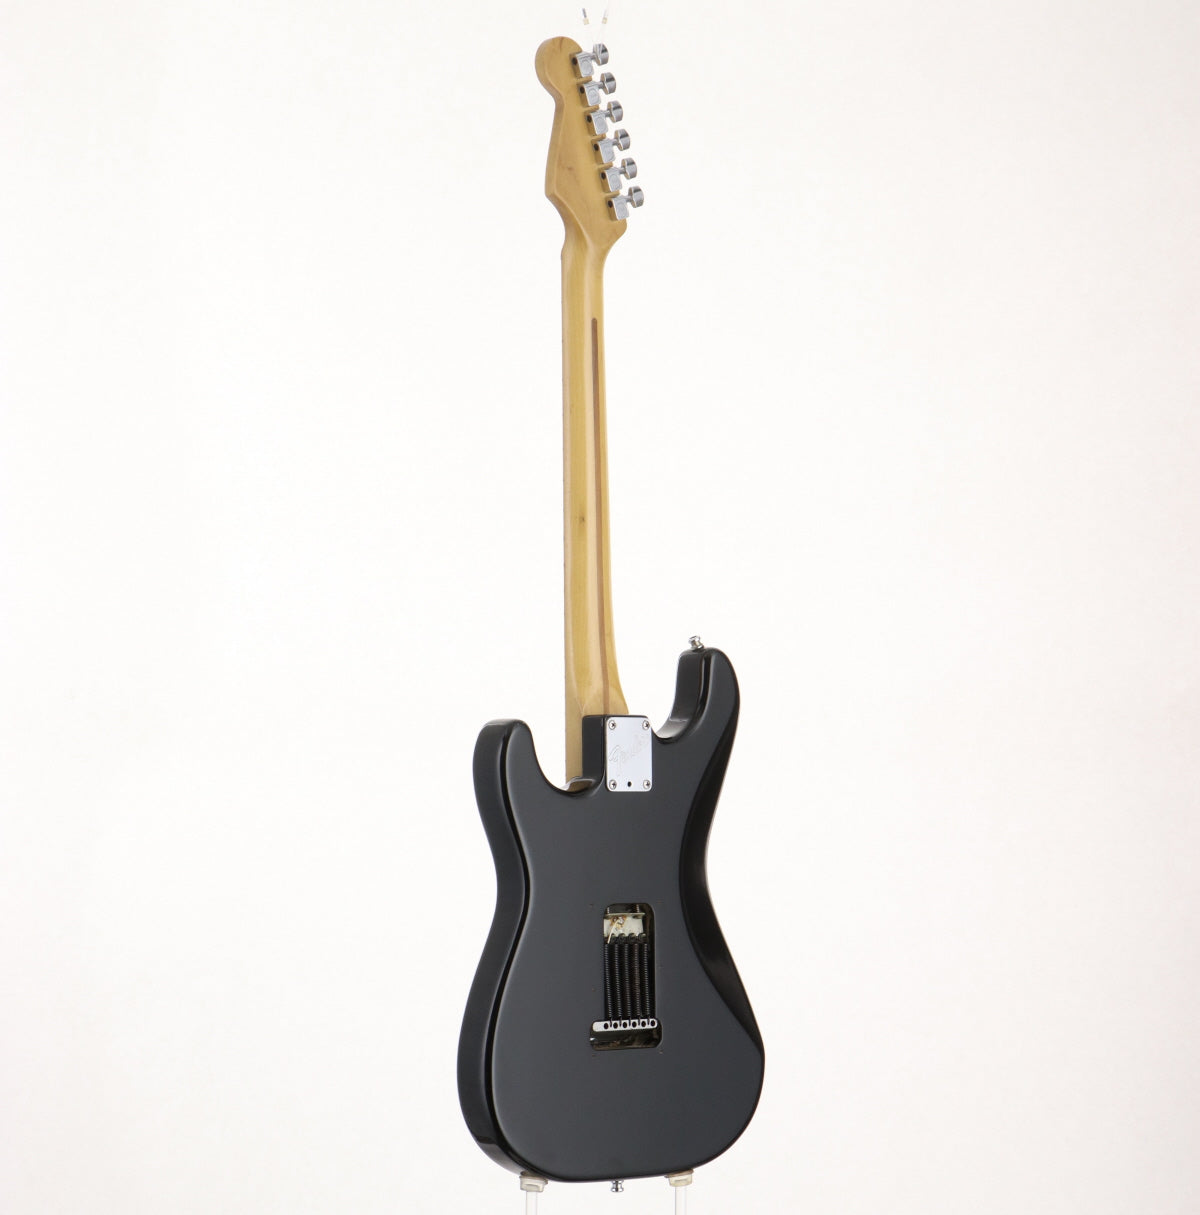 [SN E901921] USED Fender USA / Deluxe American Standard Stratocaster Black [06]